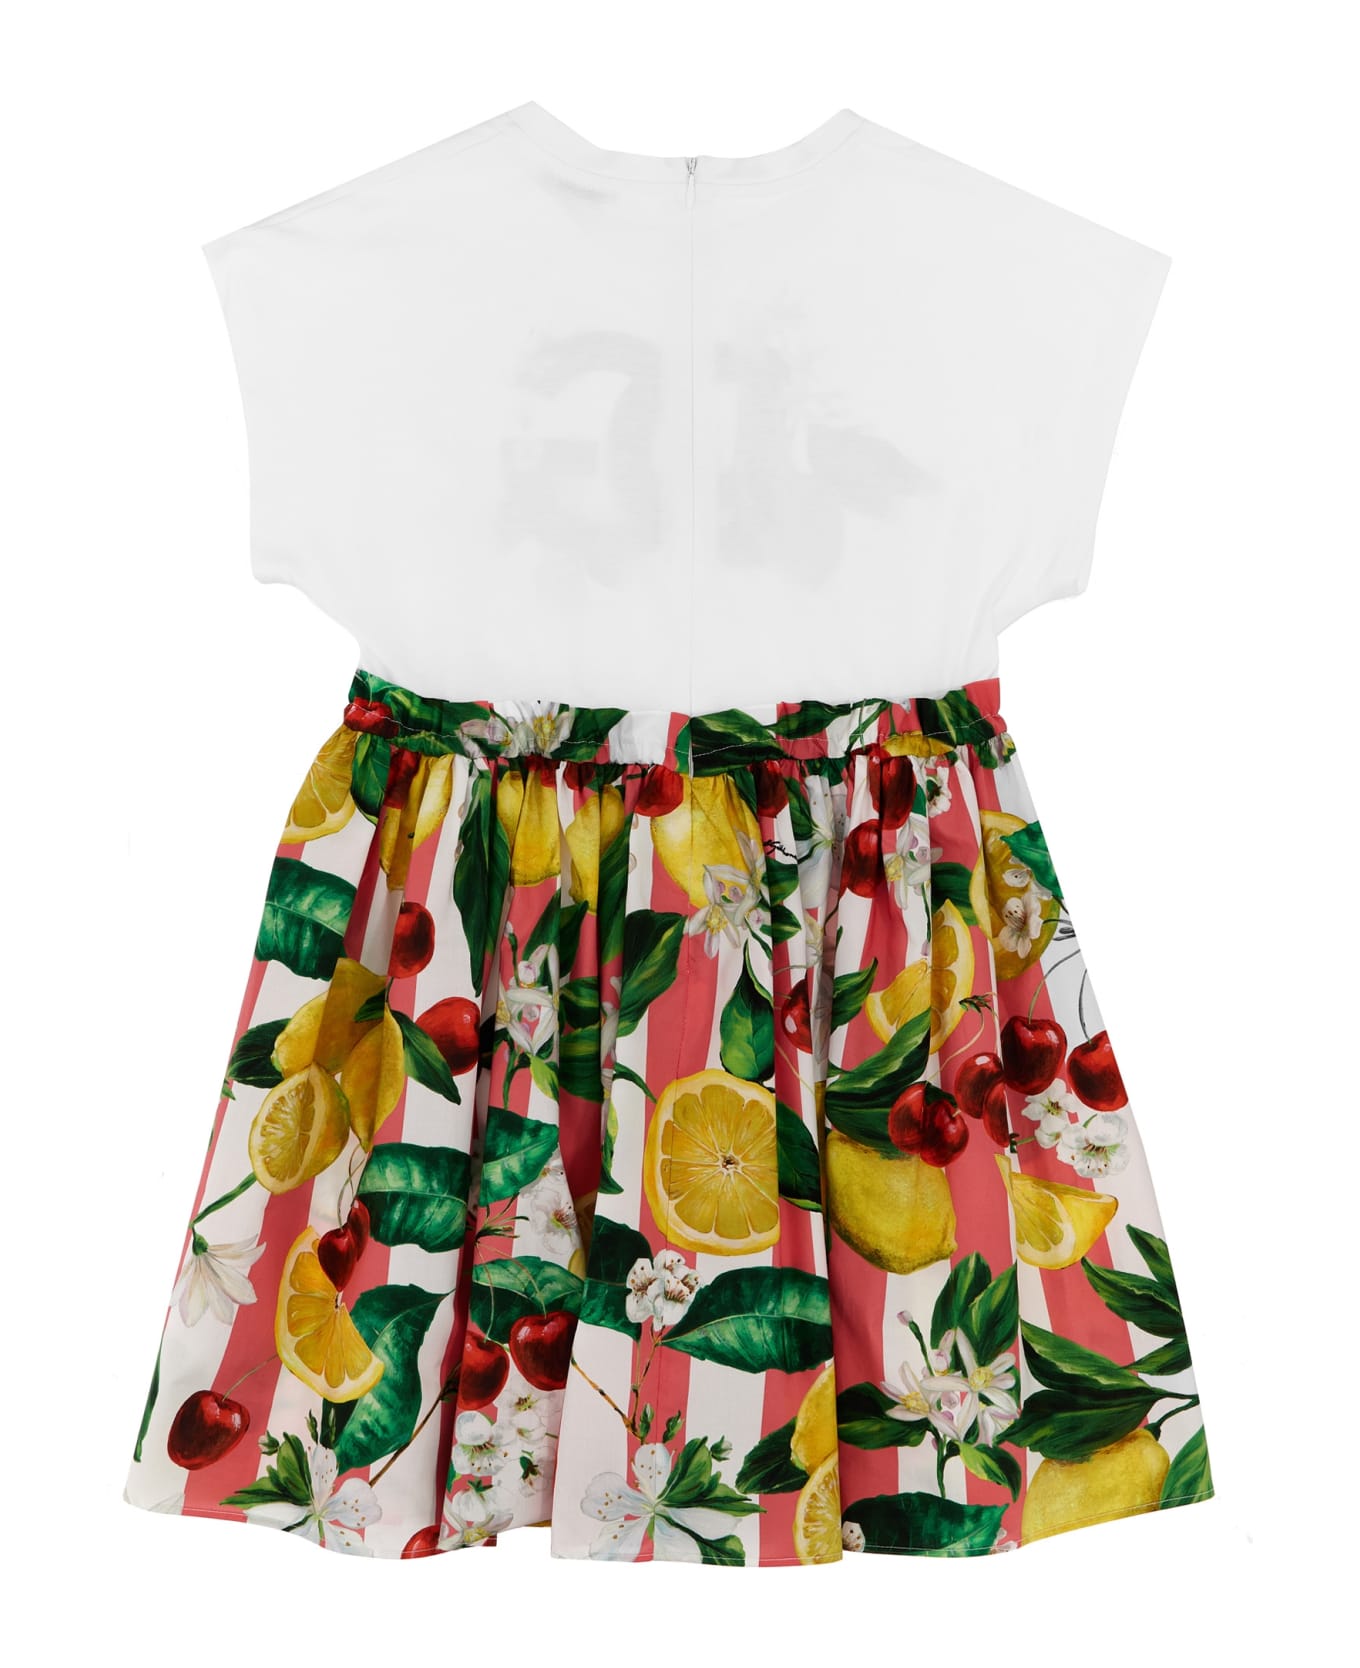 Dolce & Gabbana Fruit Print Dress - Variante